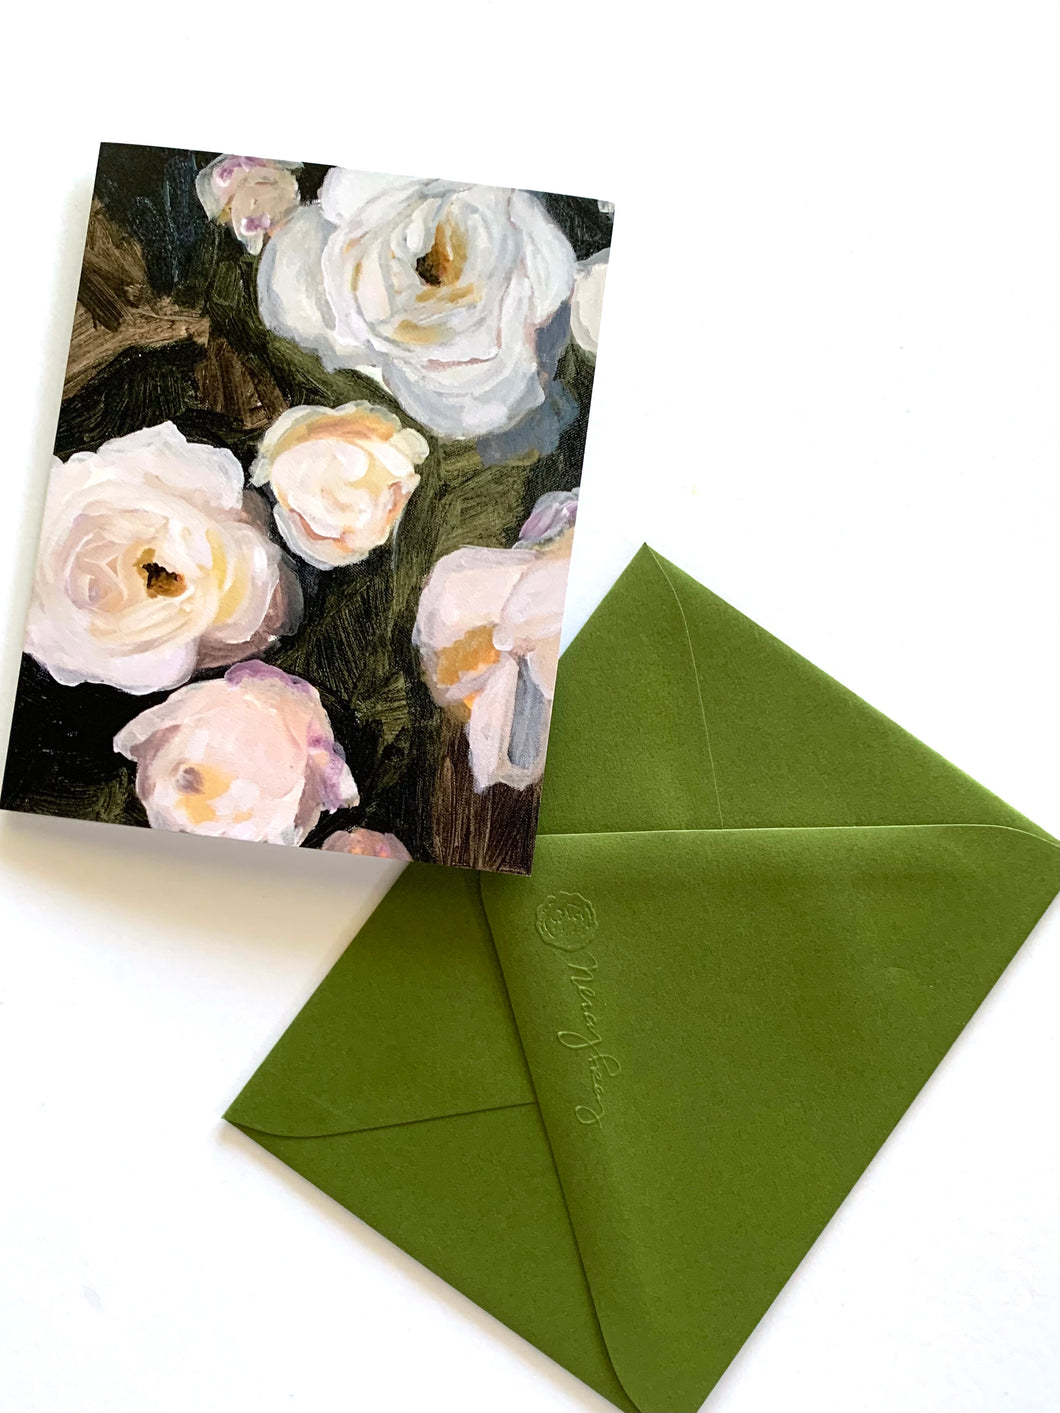 Vintage Tea Roses Greeting Card